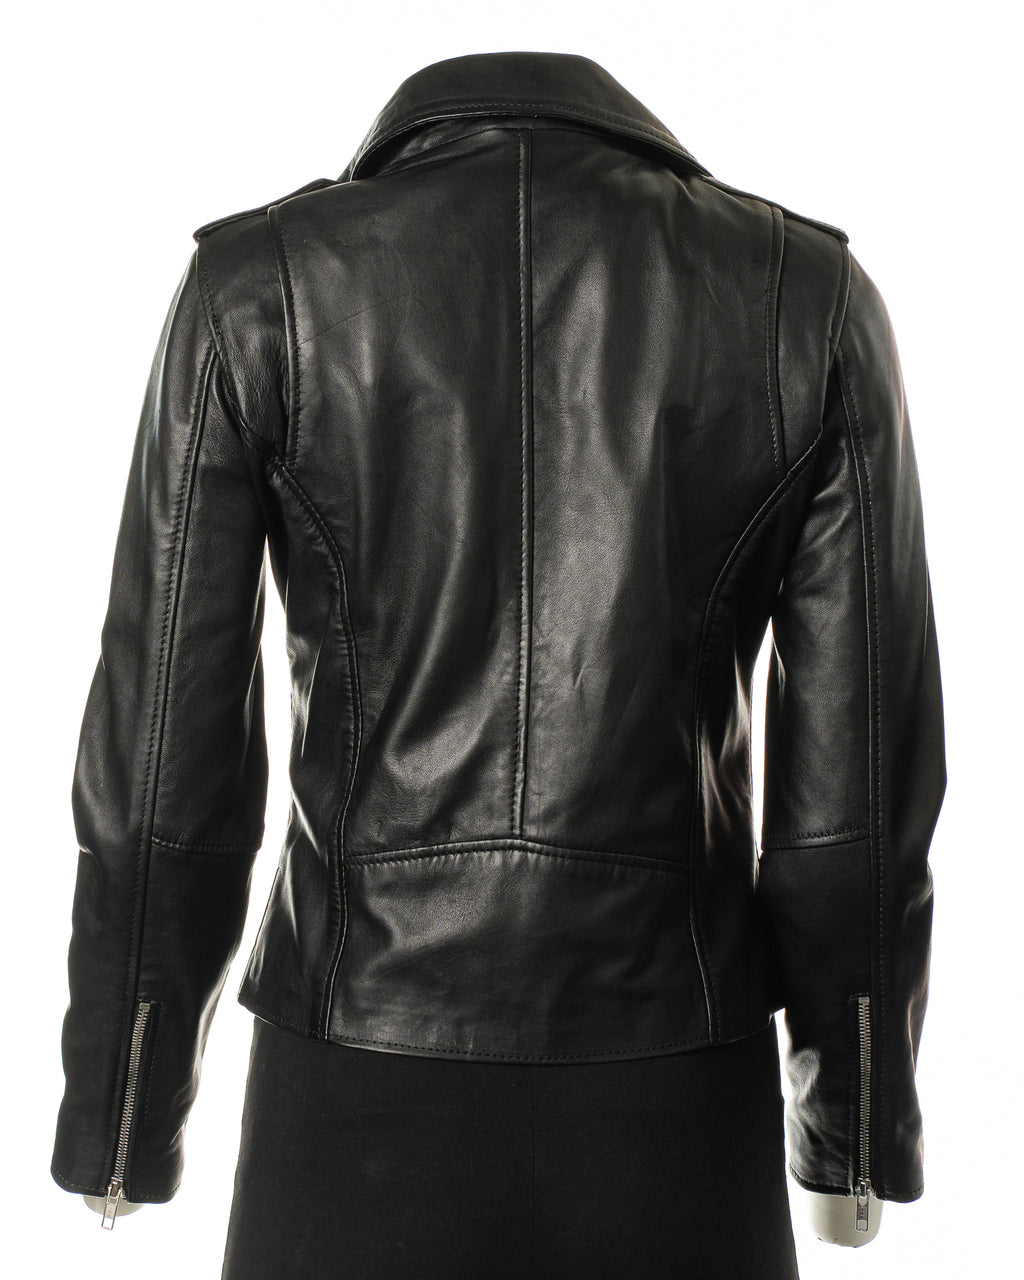 Ladies Classic Brando Style Leather Jacket: Bettina